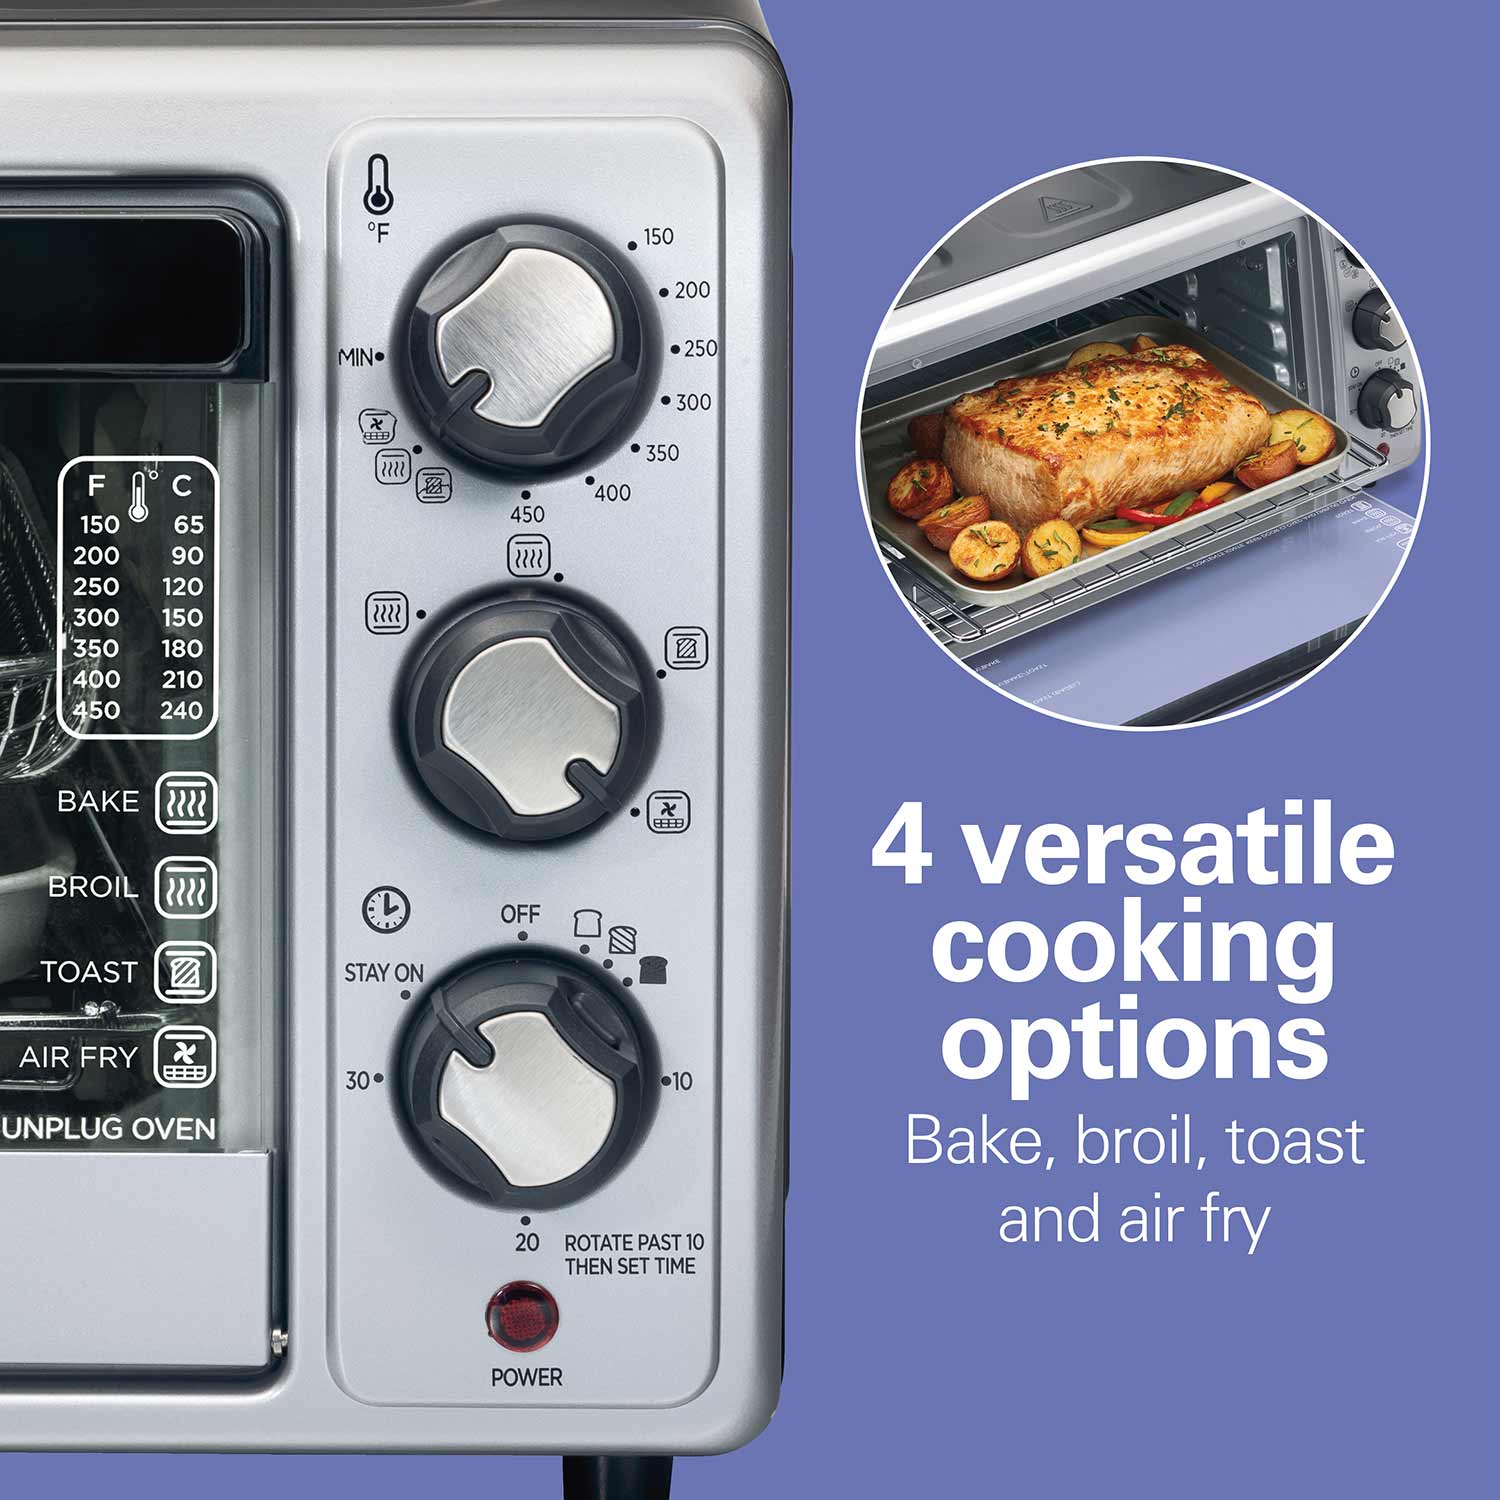 Hamilton Beach Sure-Crisp® Air Fryer Toaster Oven - 31196F